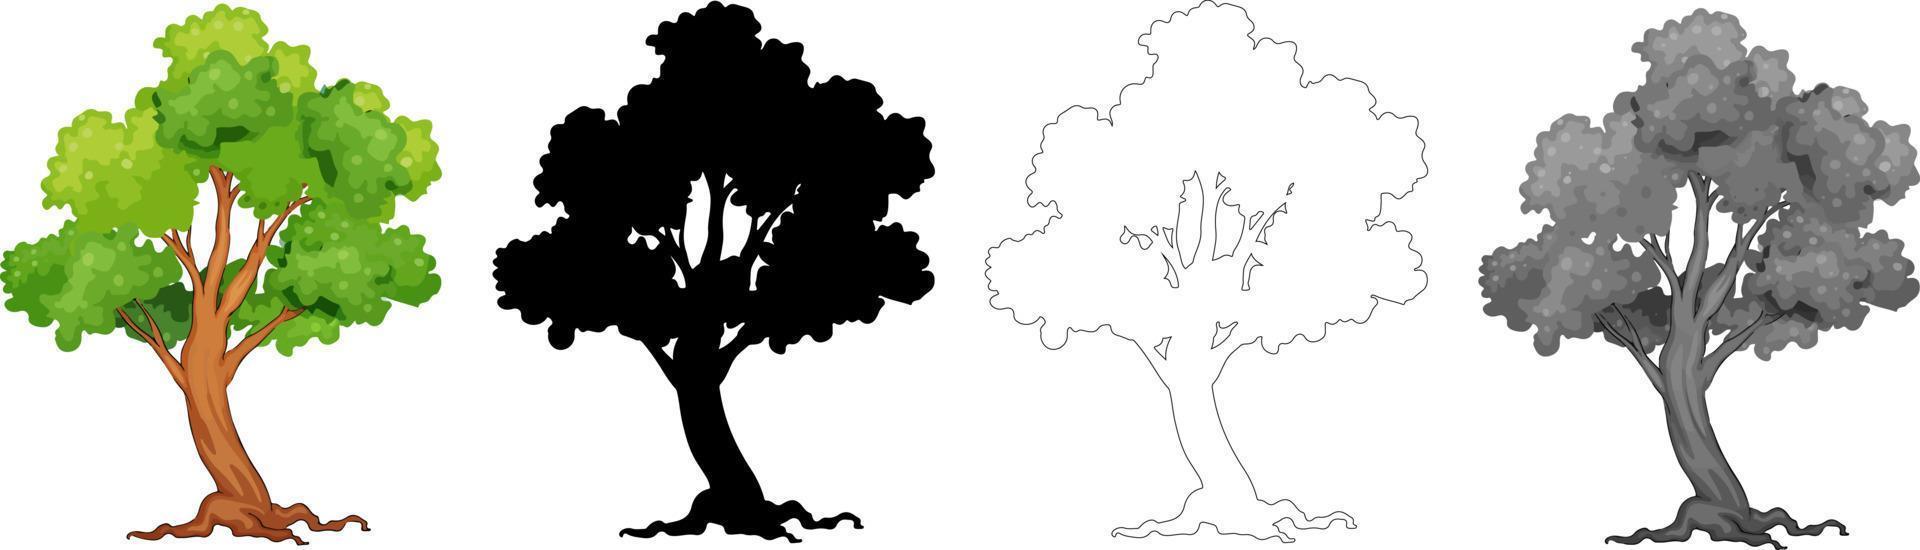 vector de árboles de colección, silueta de árbol, arte de línea de árbol sobre fondo blanco.